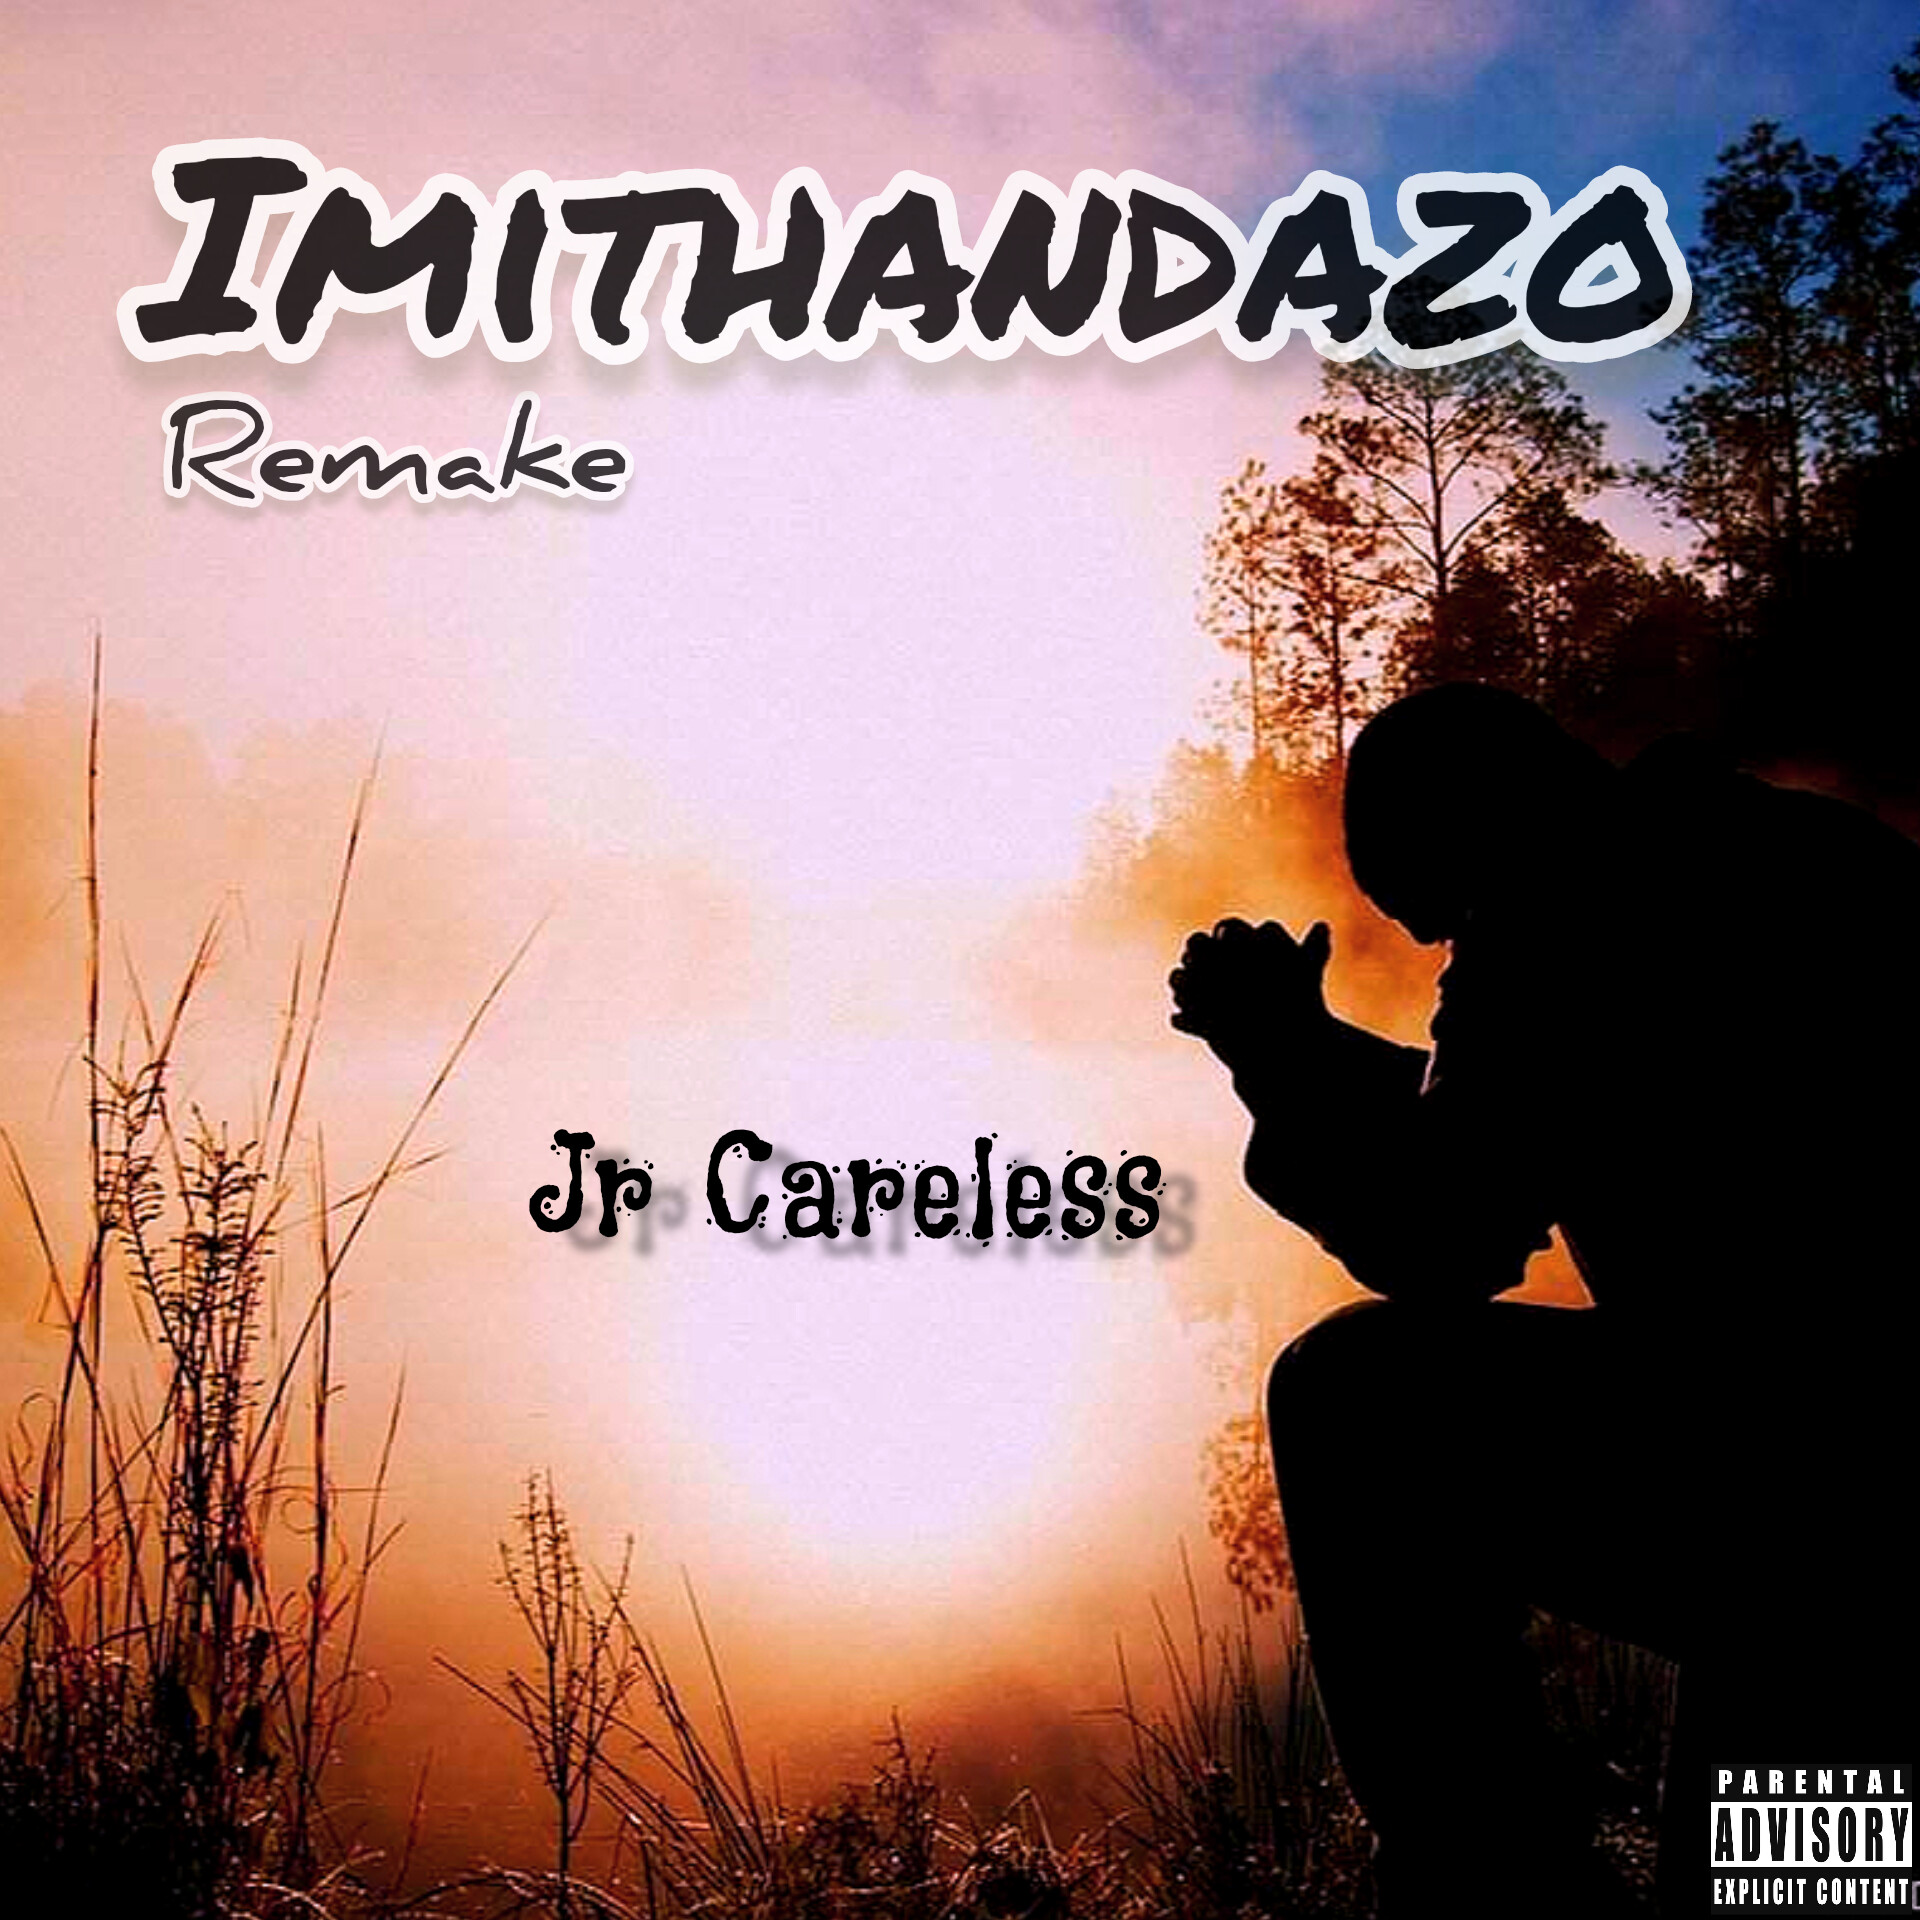 Imithandazo (Remake) - Jr Careless